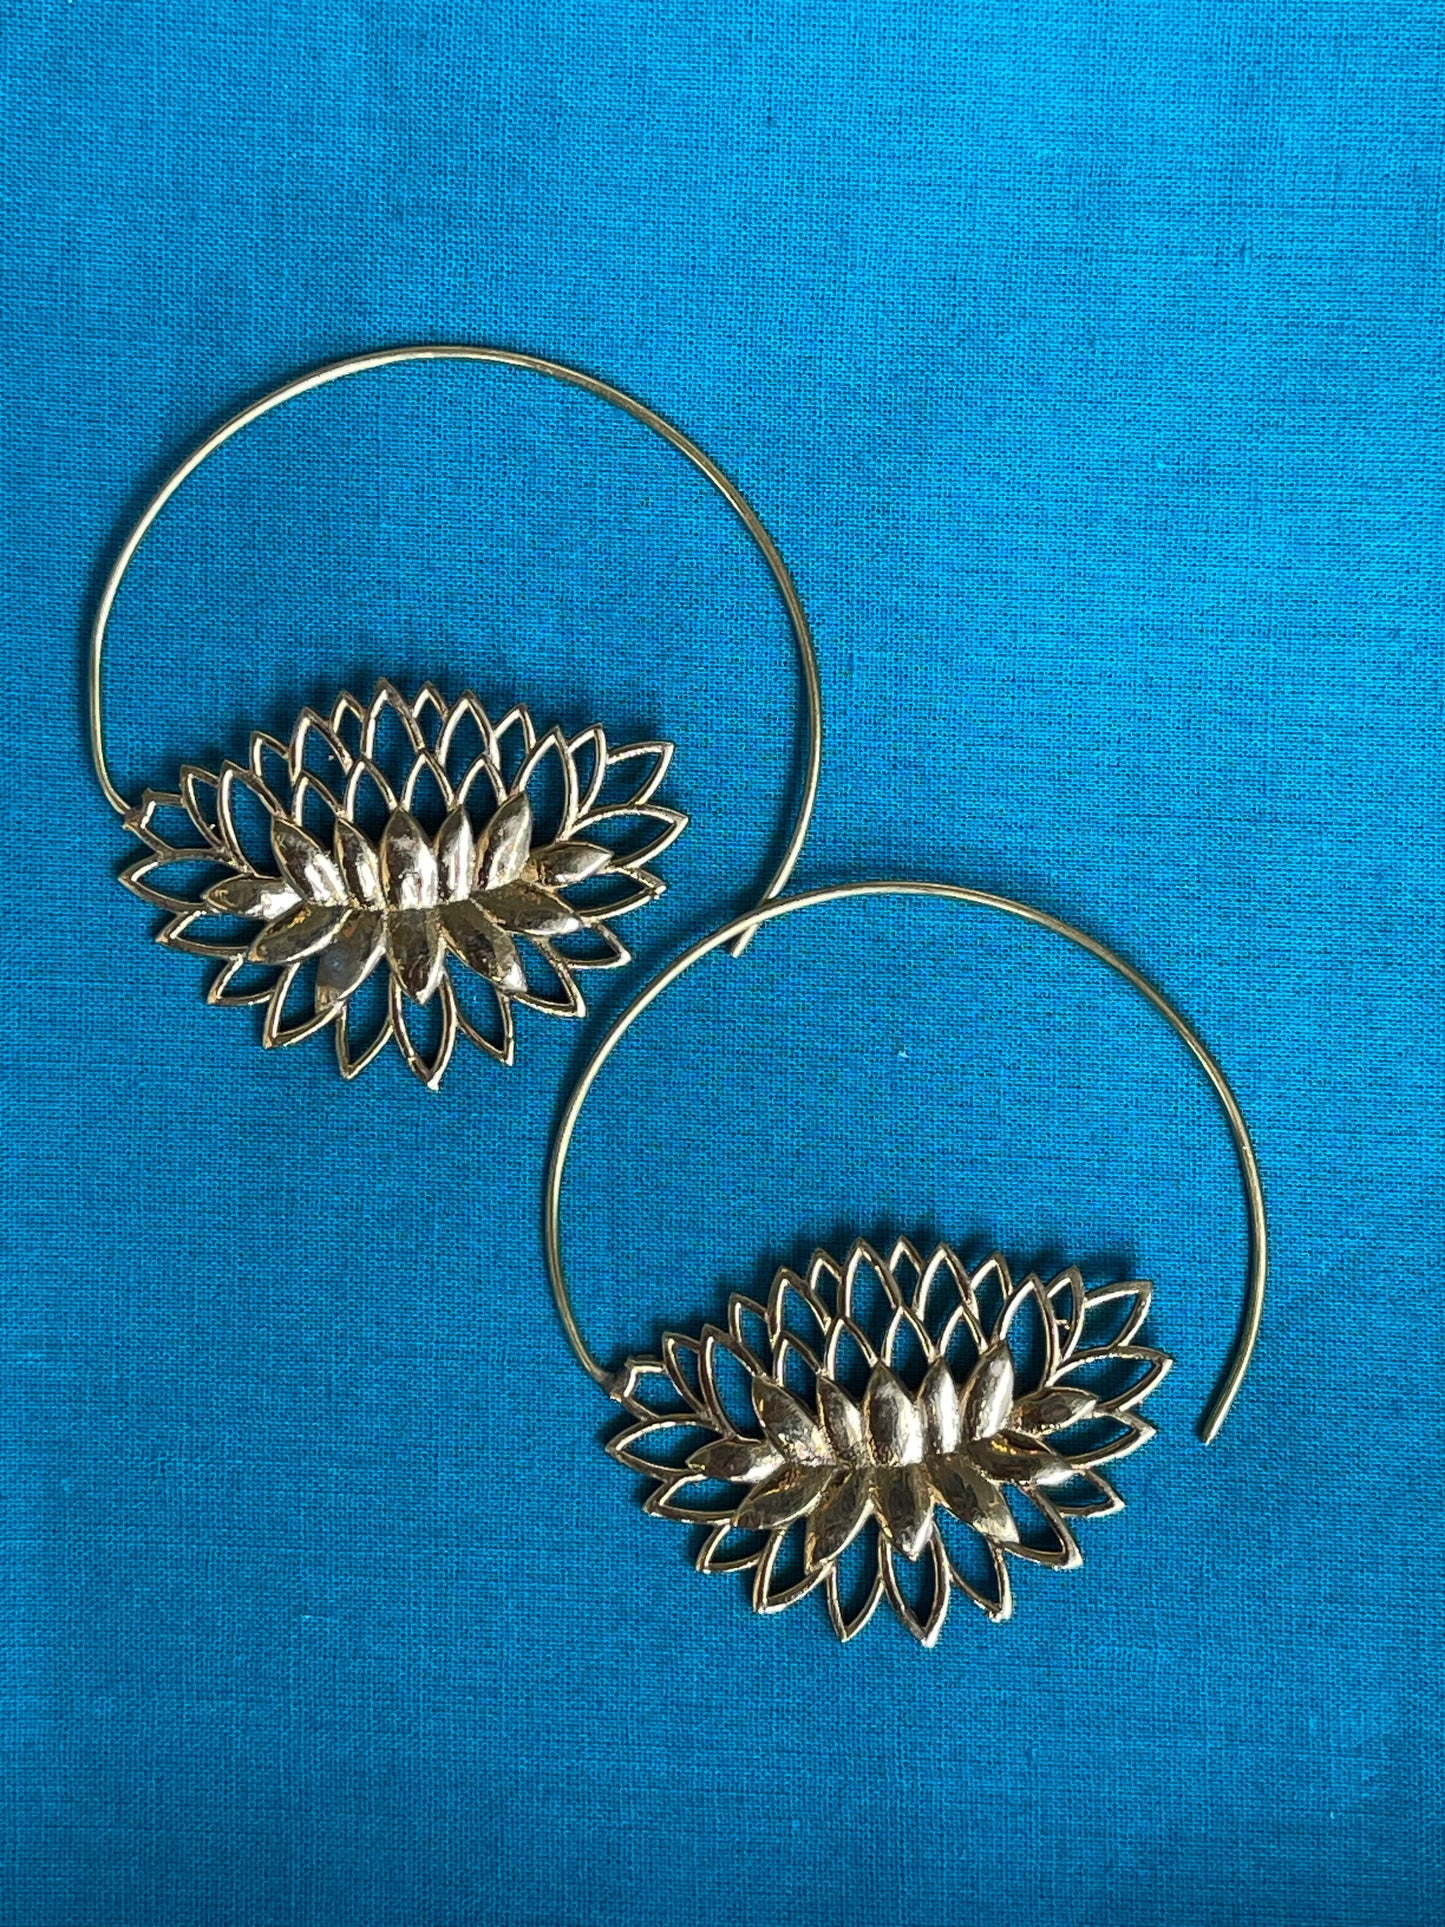 Full bloom lotus - brass side hooks earrings